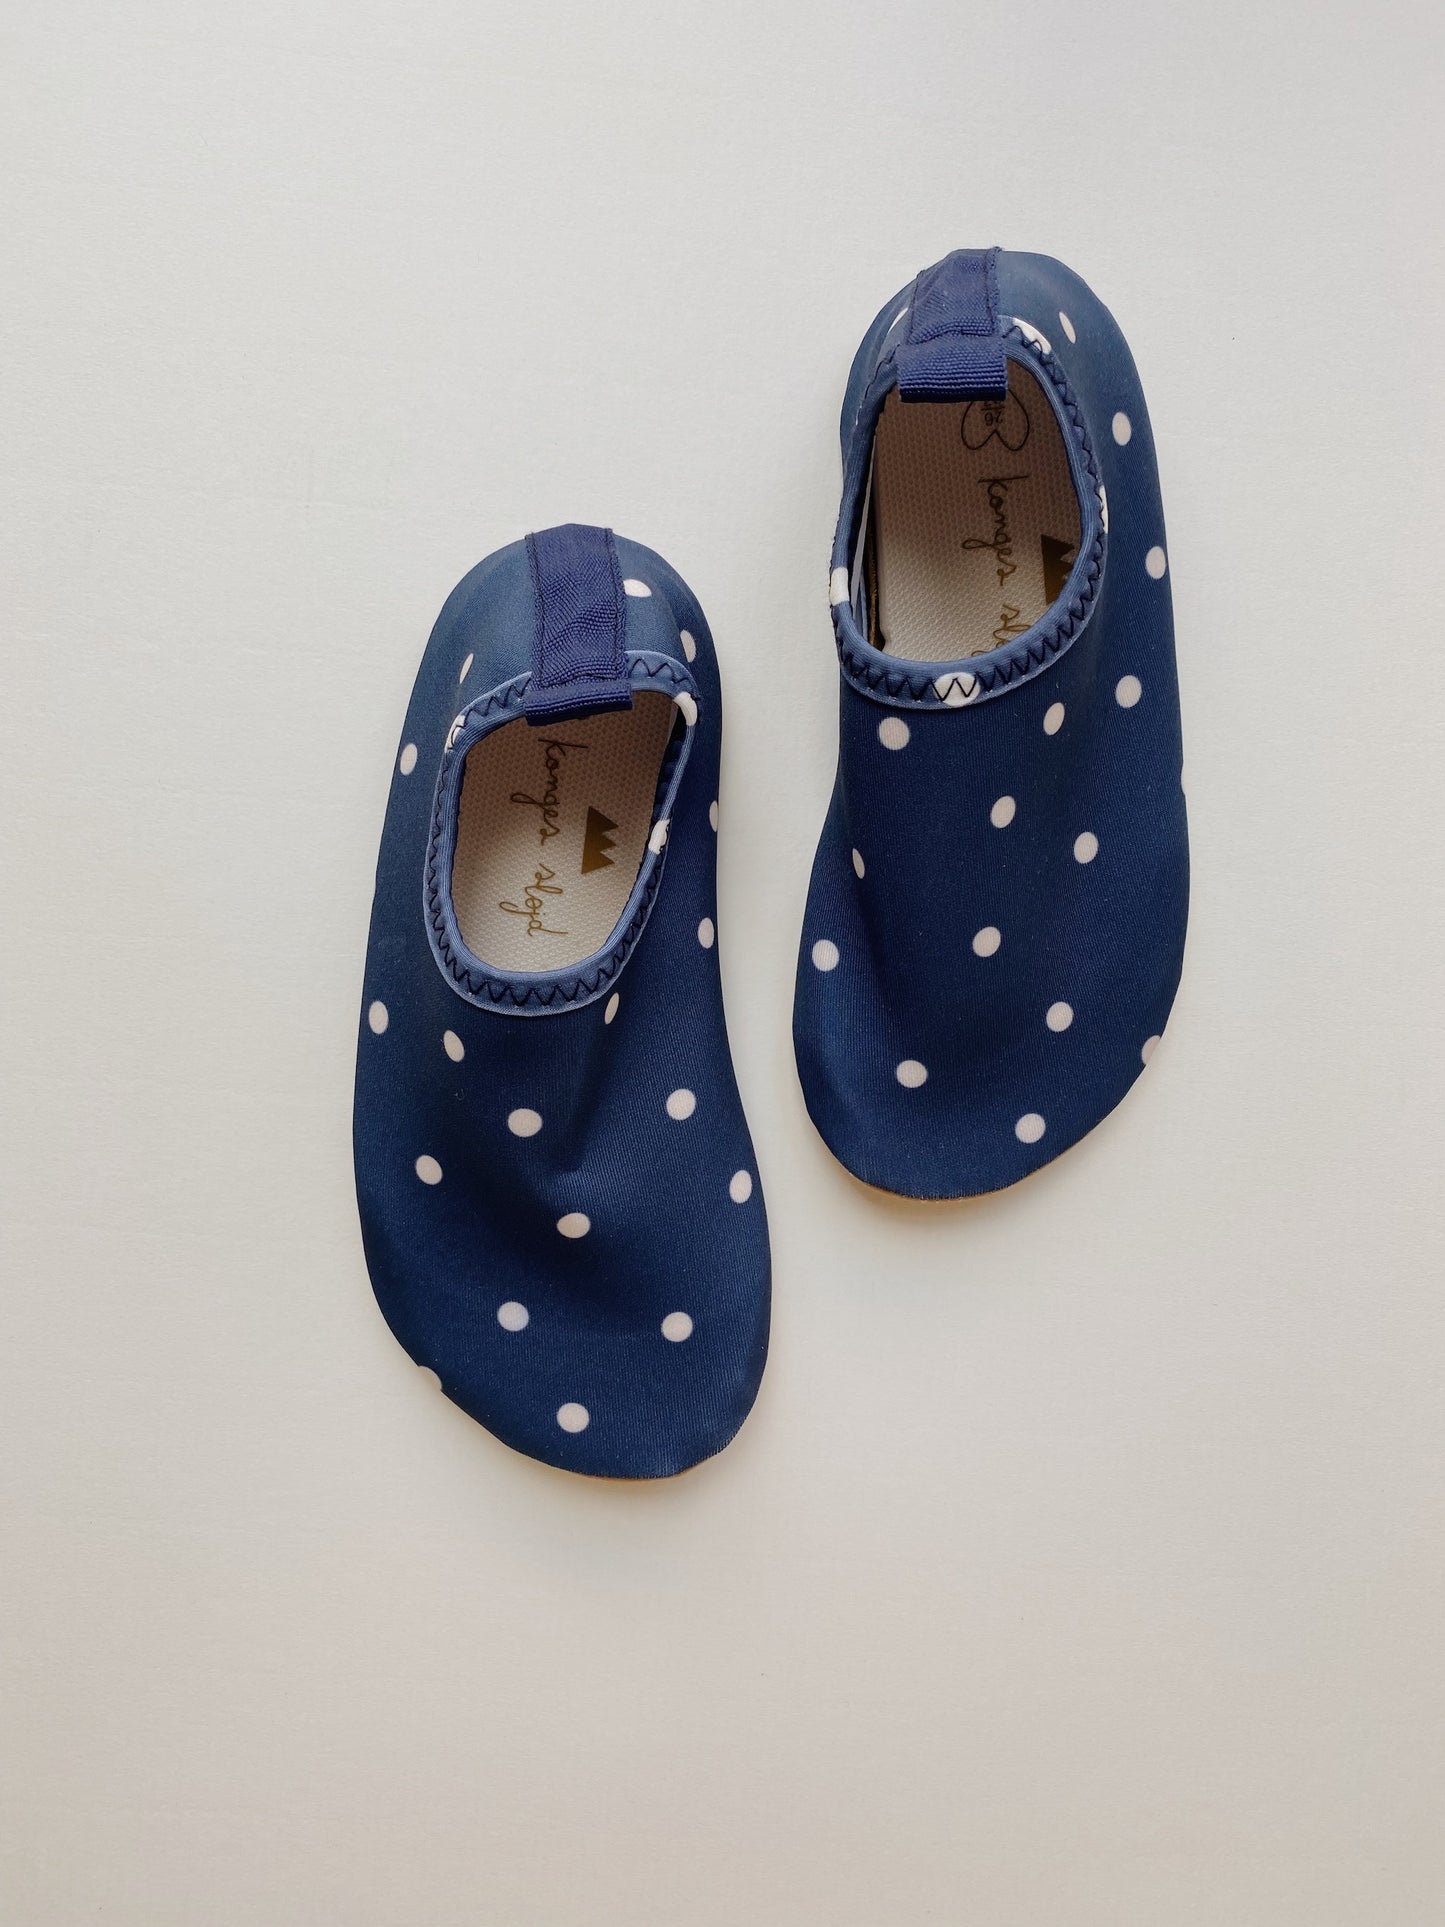 Aster swim shoes - Kelly blue dot